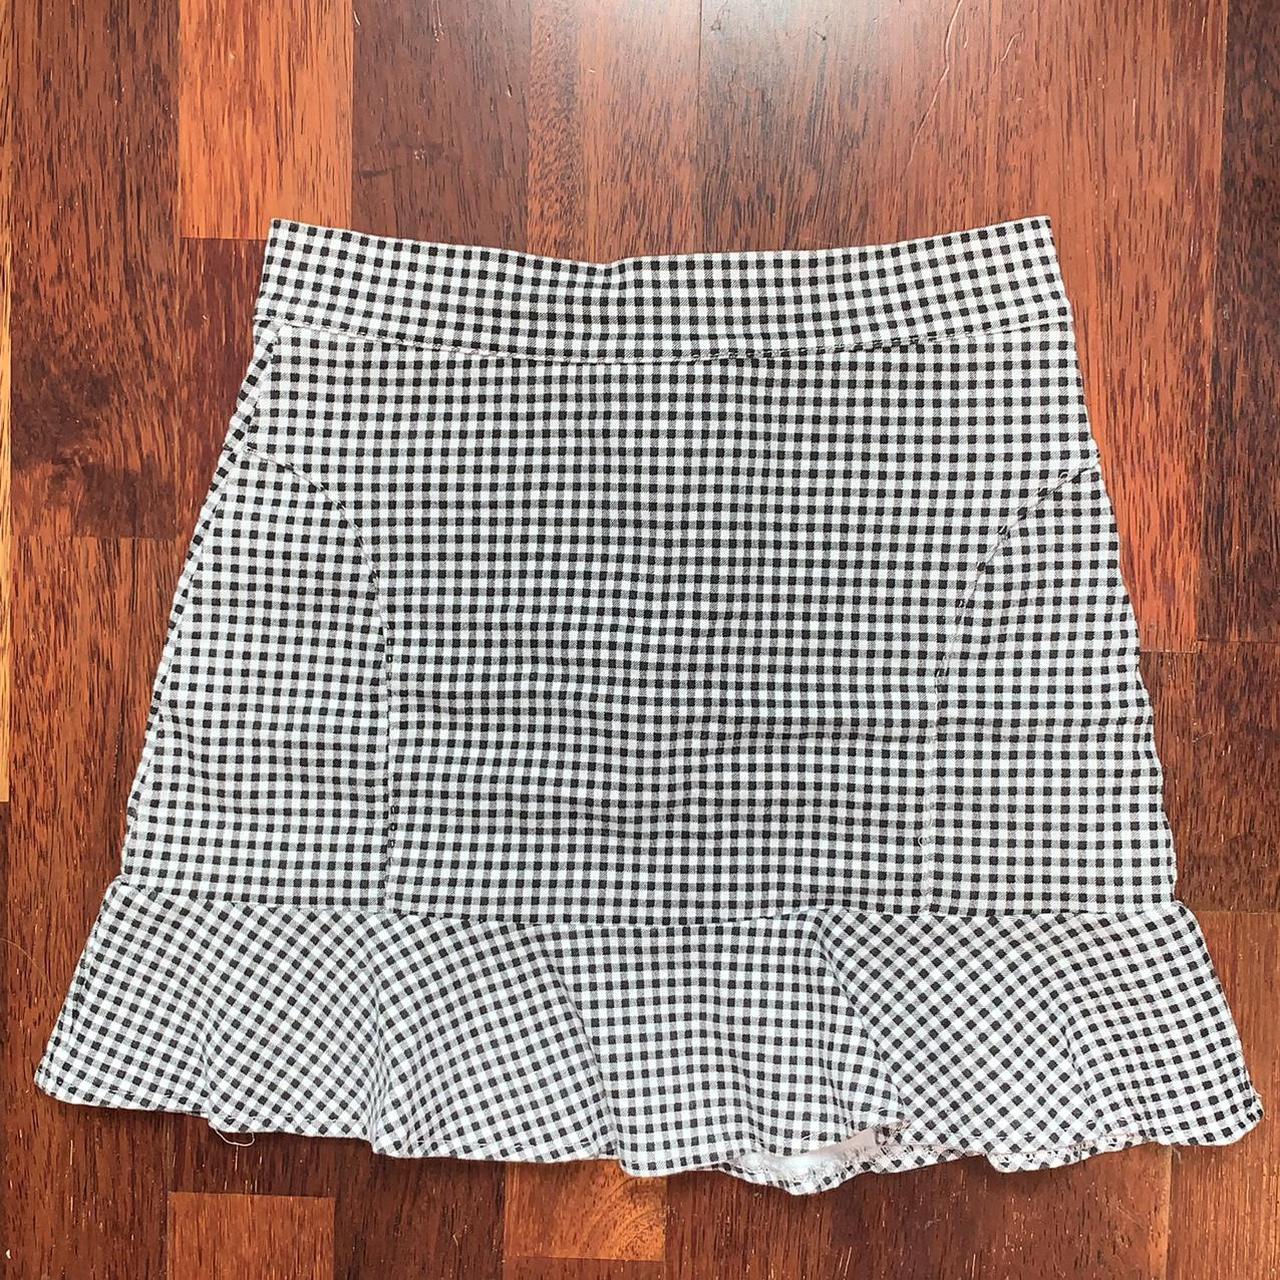 Gingham mini skirt with pleated bottom (FREE... - Depop